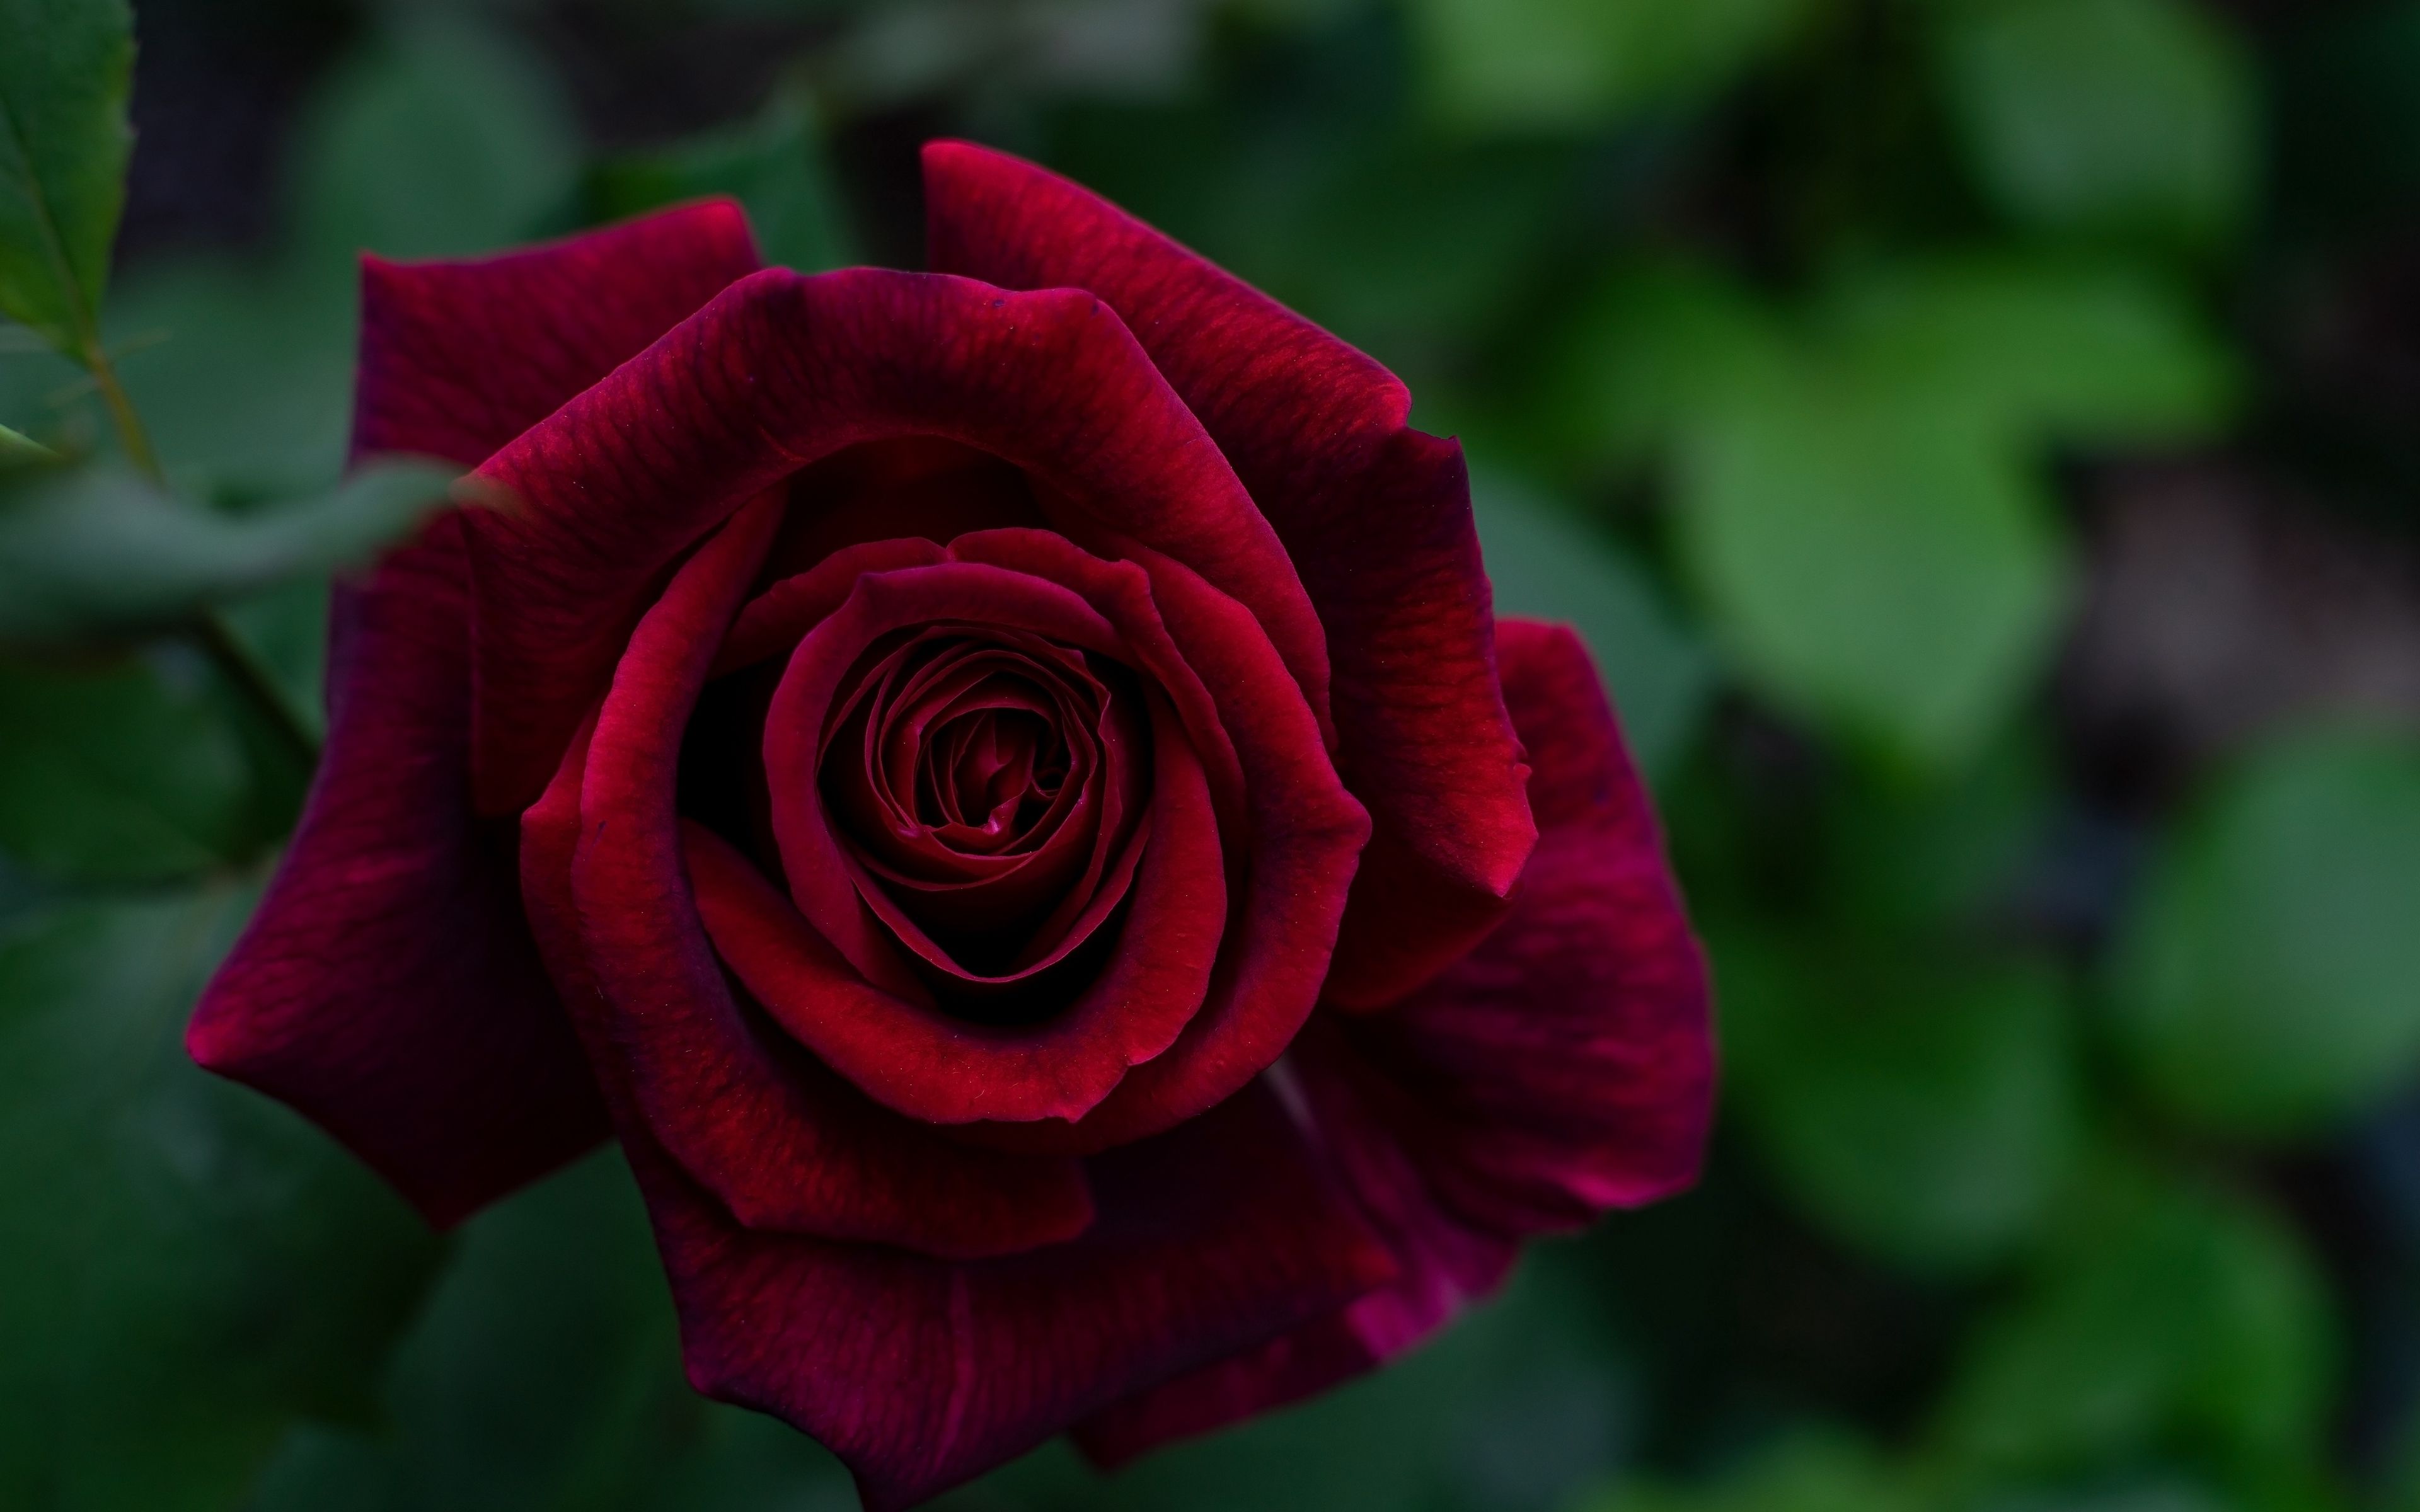 red rose wallpaper download,flower,rose,garden roses,flowering plant,petal